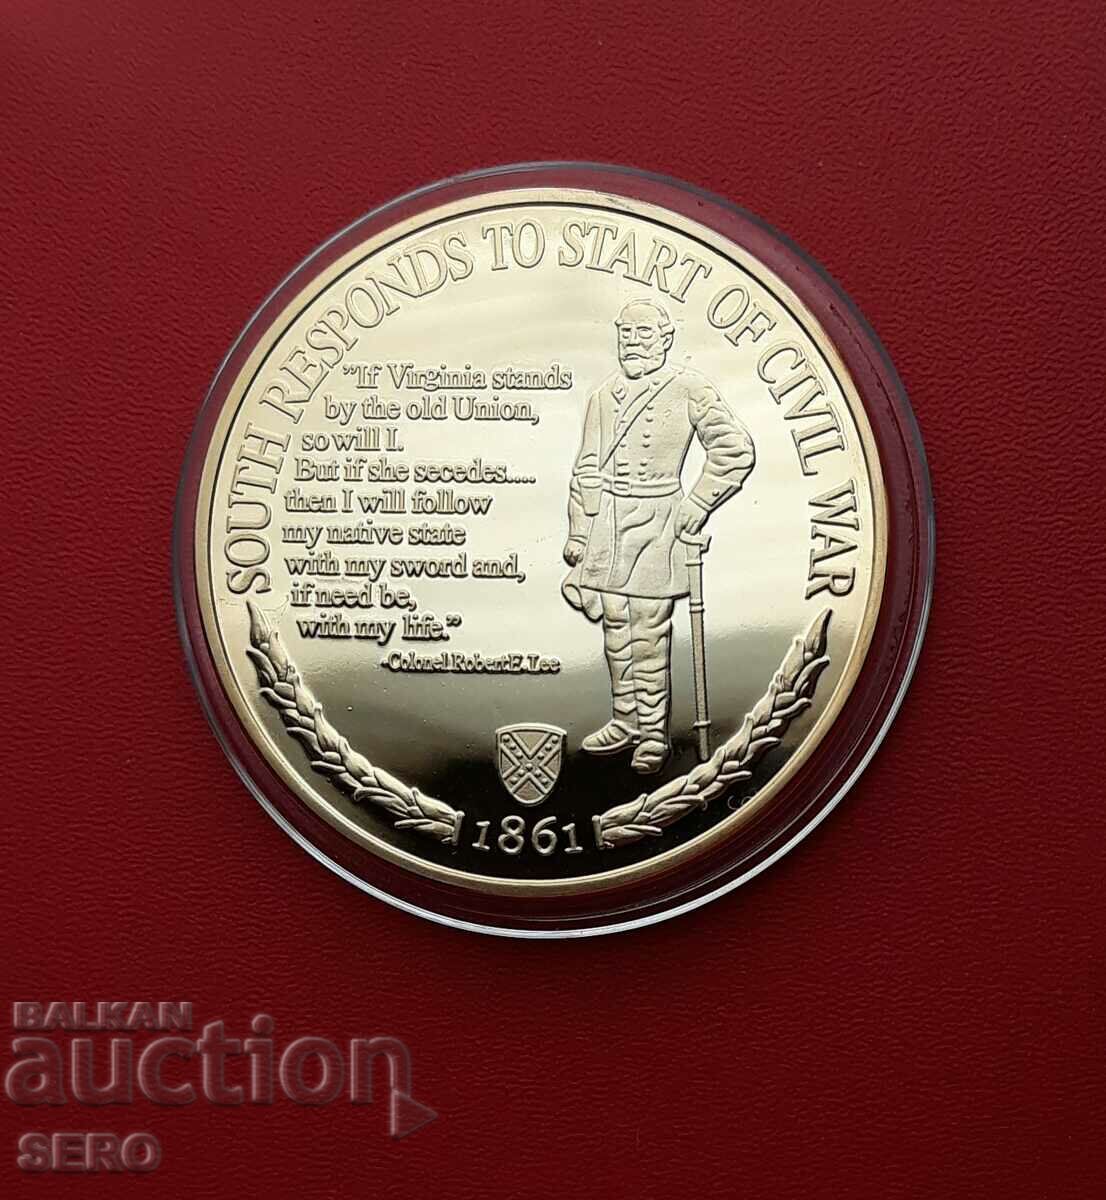 USA-Medal-150th Anniversary of the Civil War-General Robert Lee